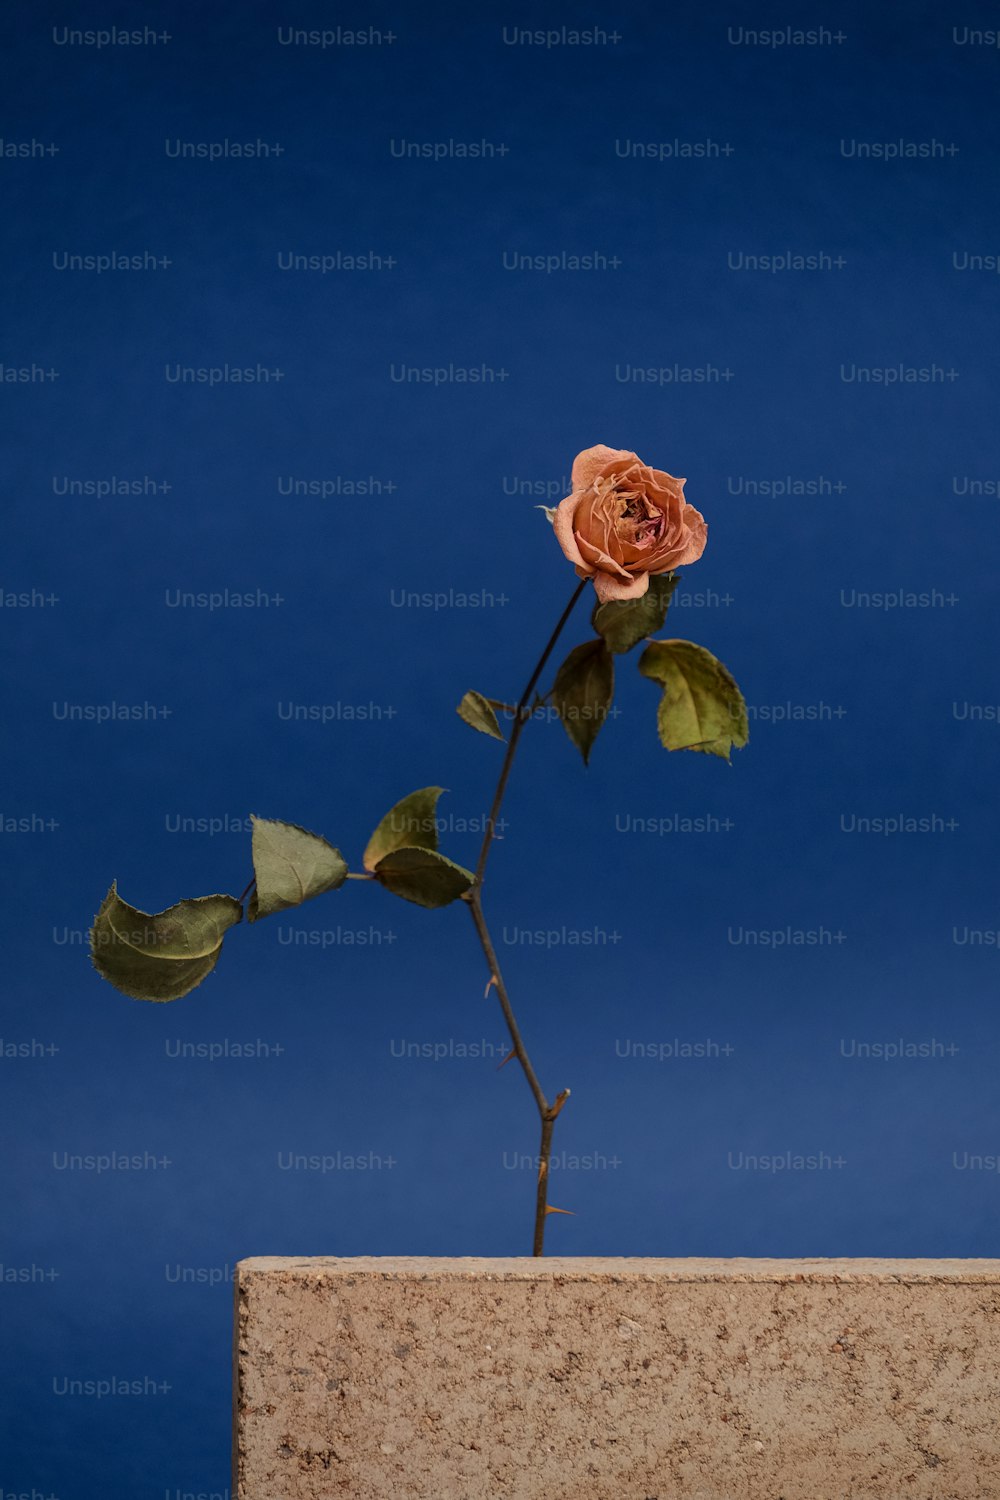 Best 500+ Florist Pictures  Download Free Images on Unsplash